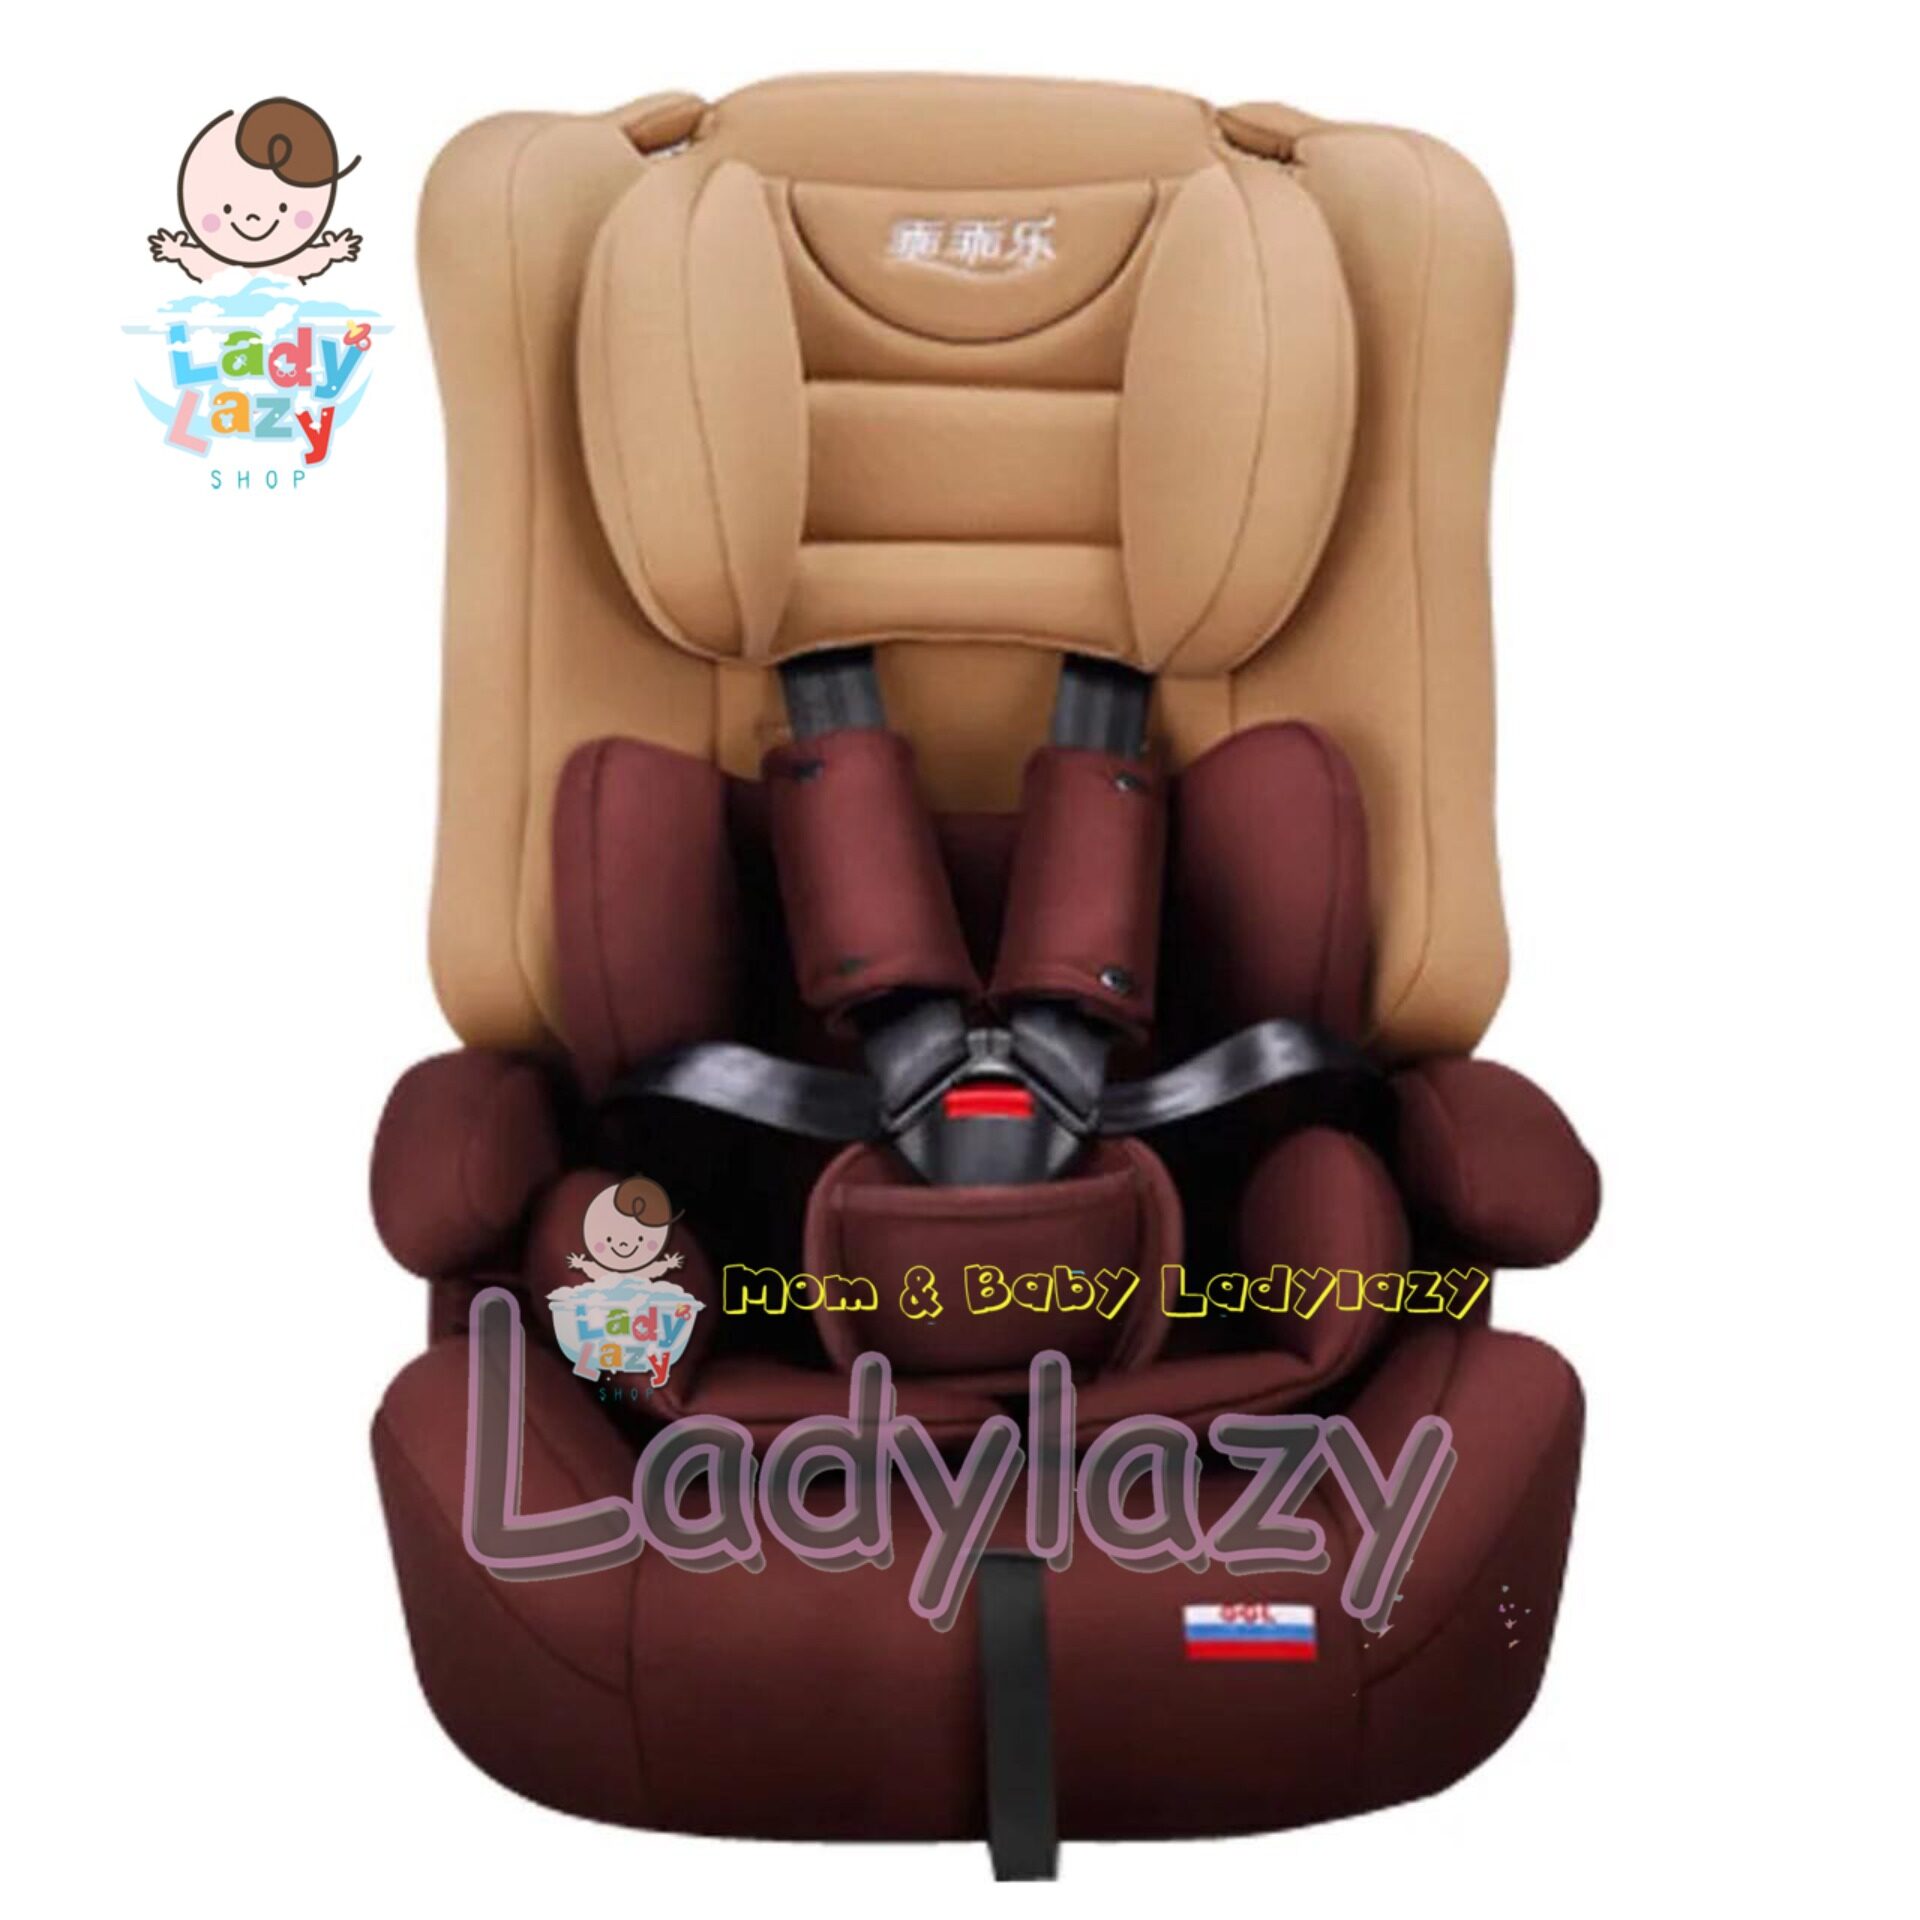 ladylazyคาร์ซีท(car seat) ที่นั่งในรถยนต์ขนาดใหญ่ GGL สีน้ำตาล